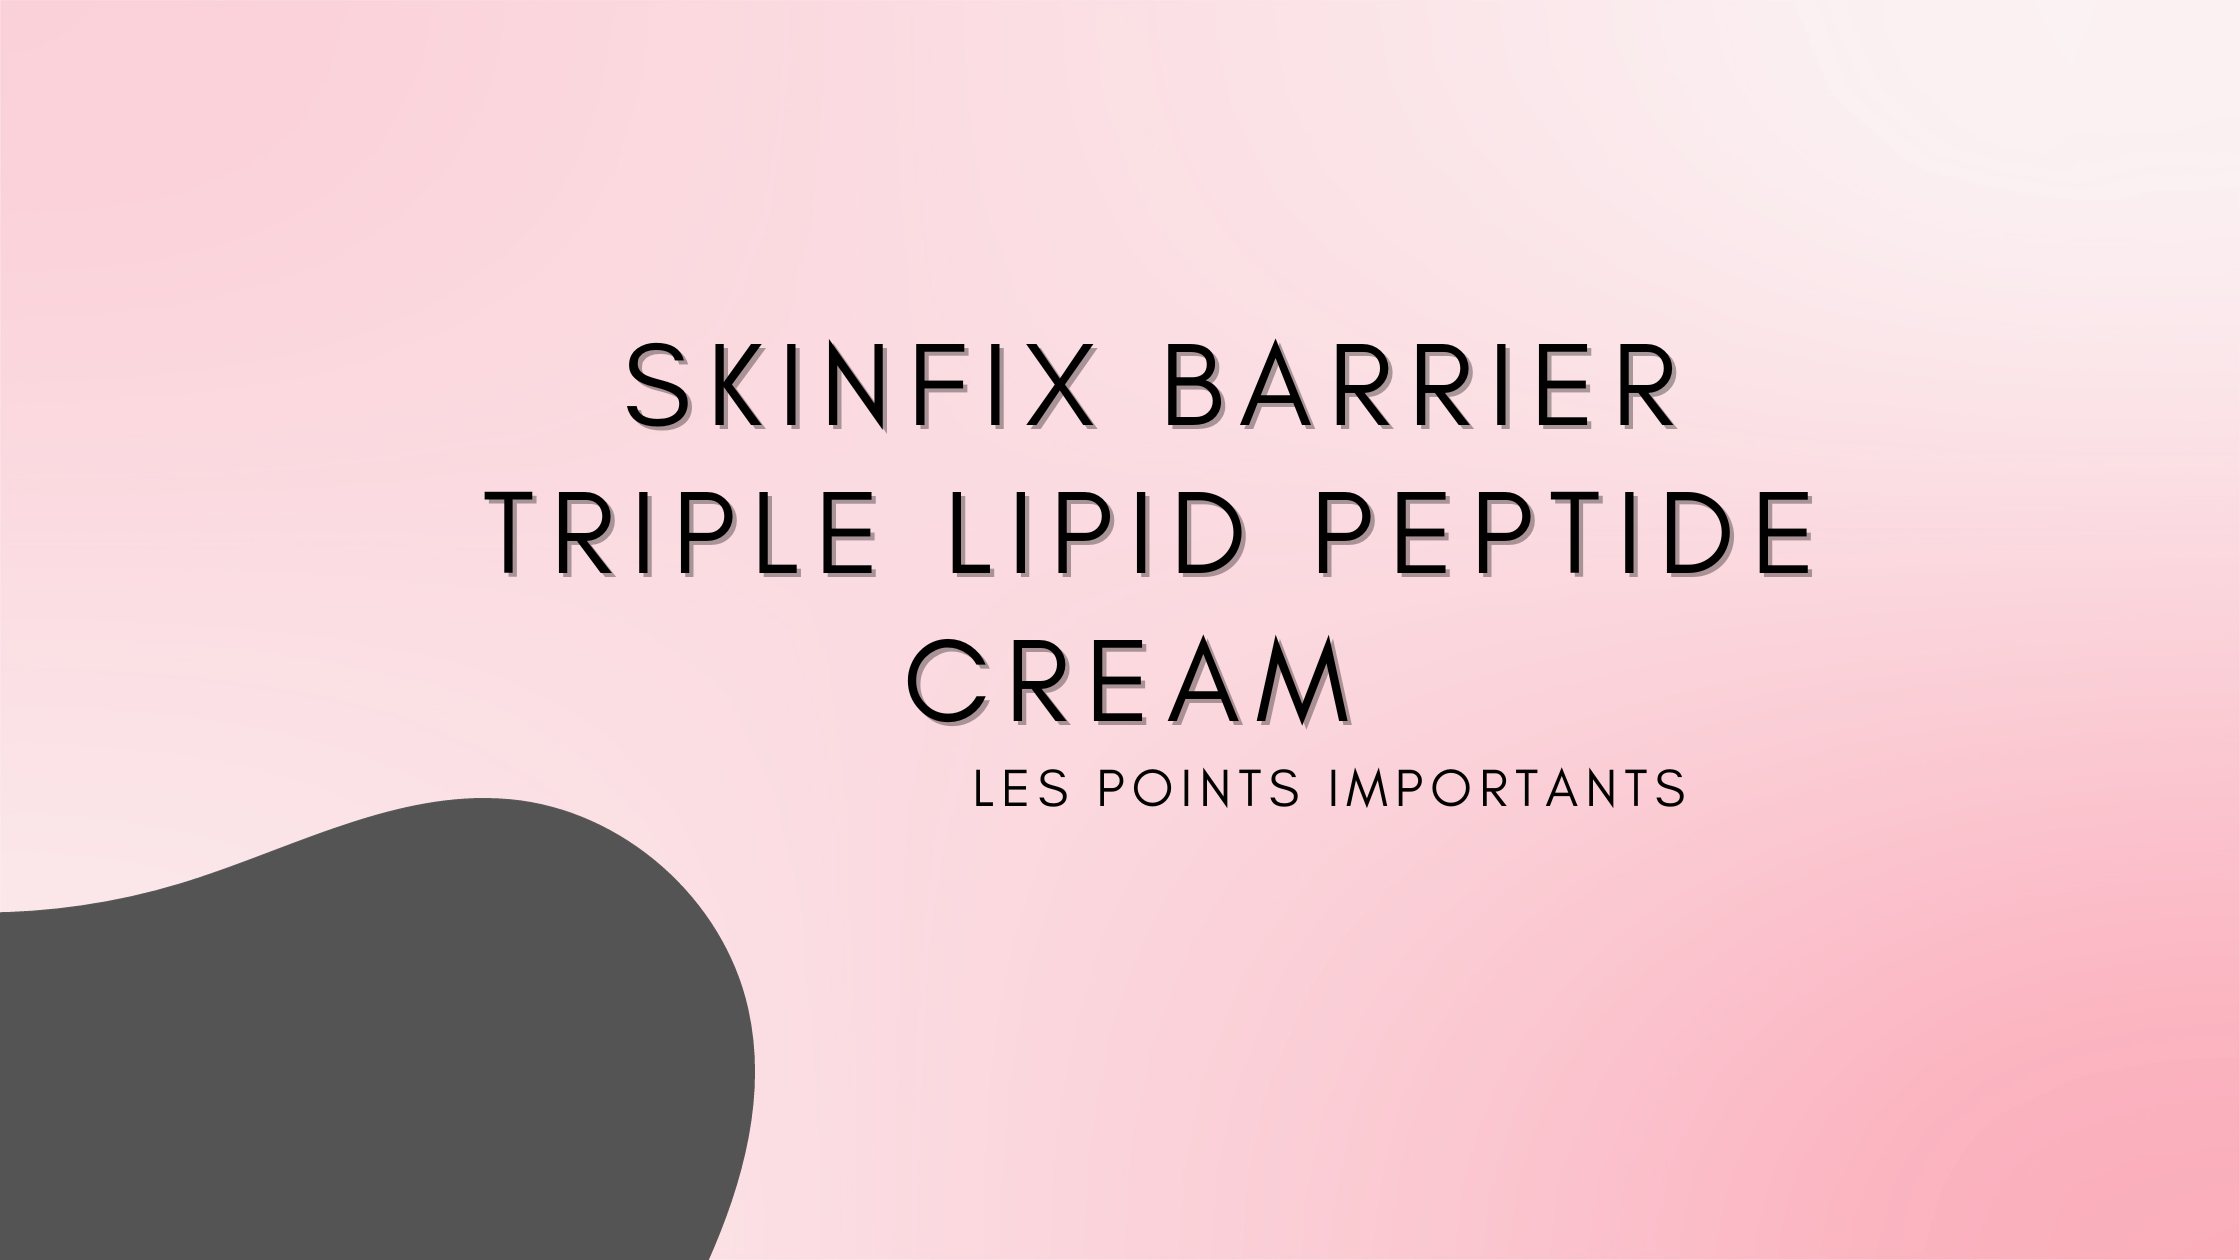 skinfix barrier triple lipid peptide cream | Les points importants